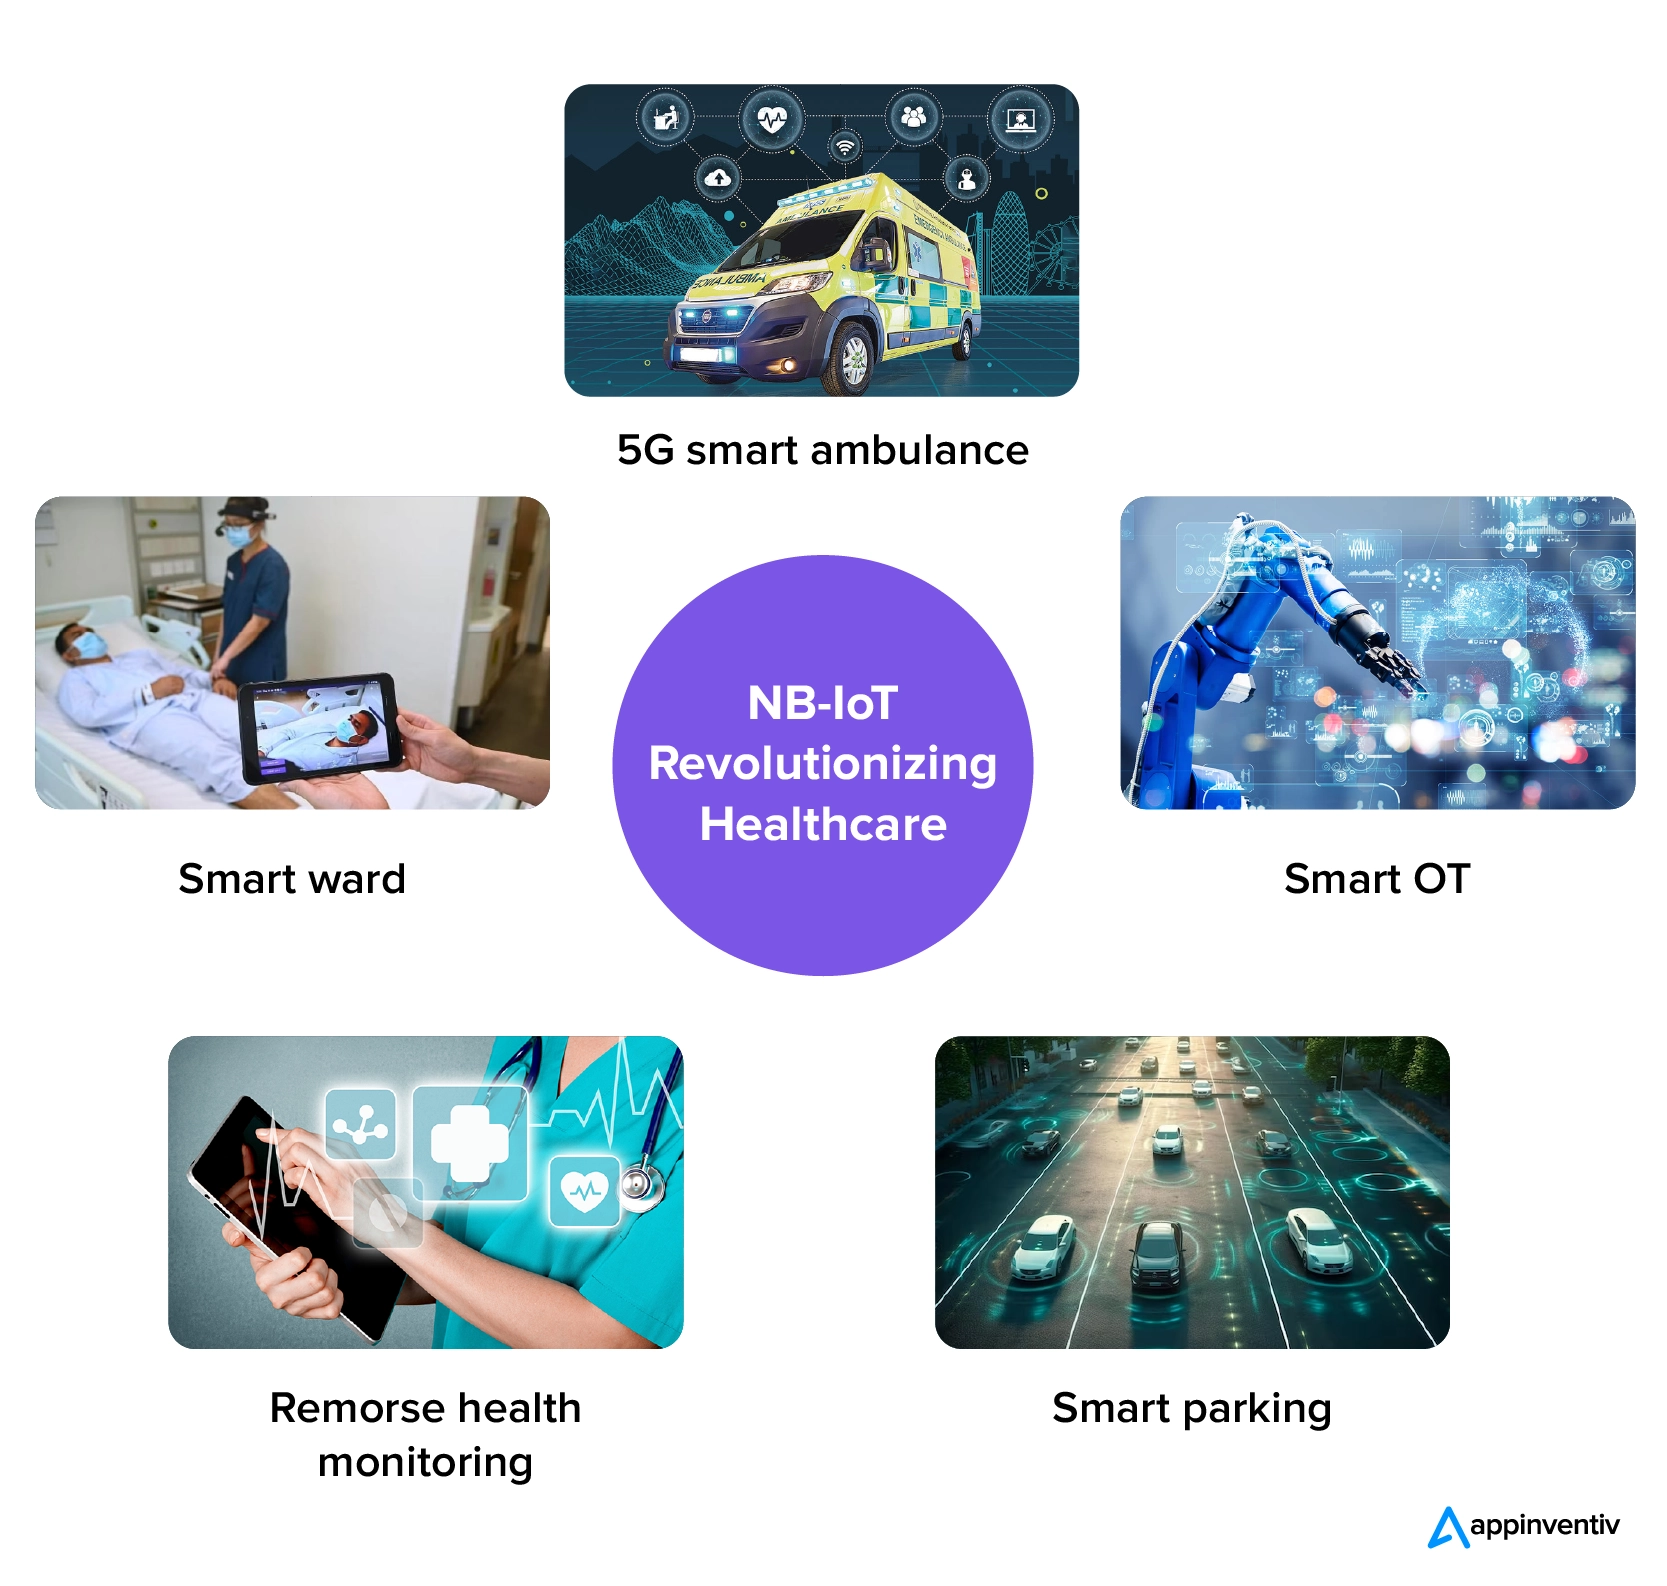 NB-IoT Revolutionizing Healthcare